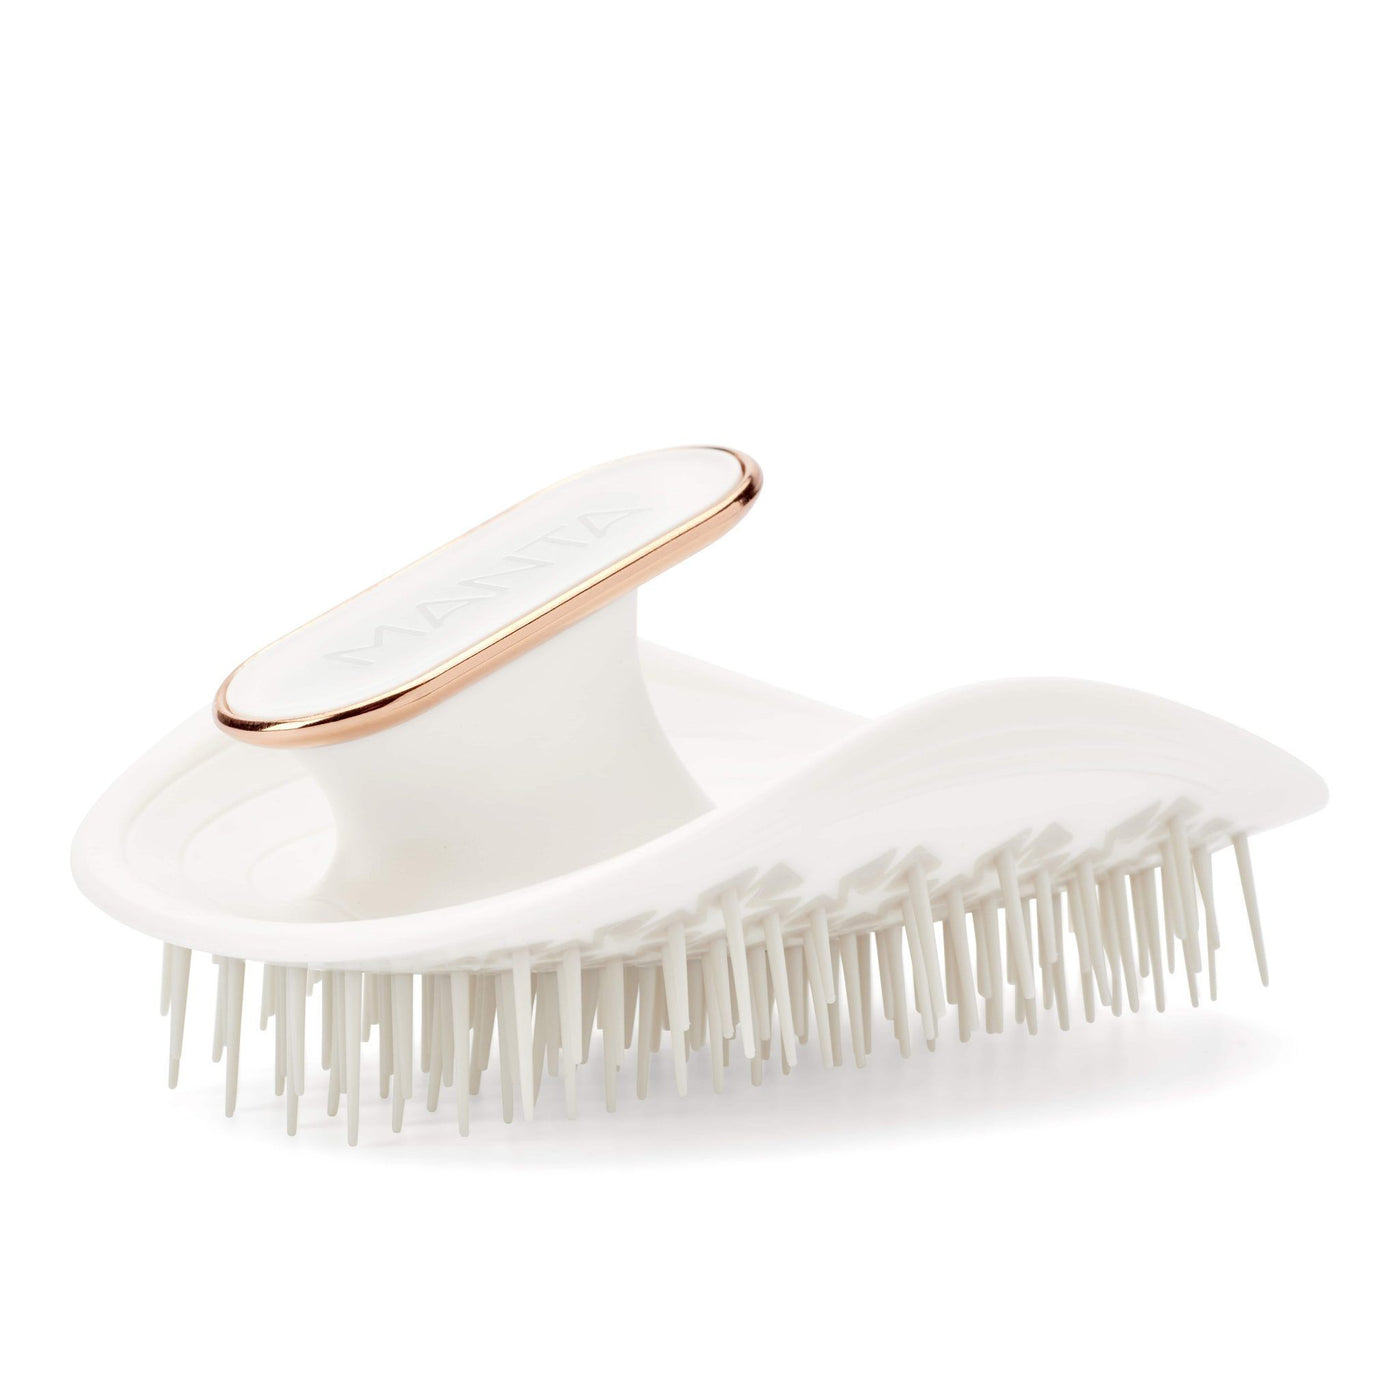 MANTA HAIR BRUSH - white | Combs & Brushes | LOSHEN & CREM